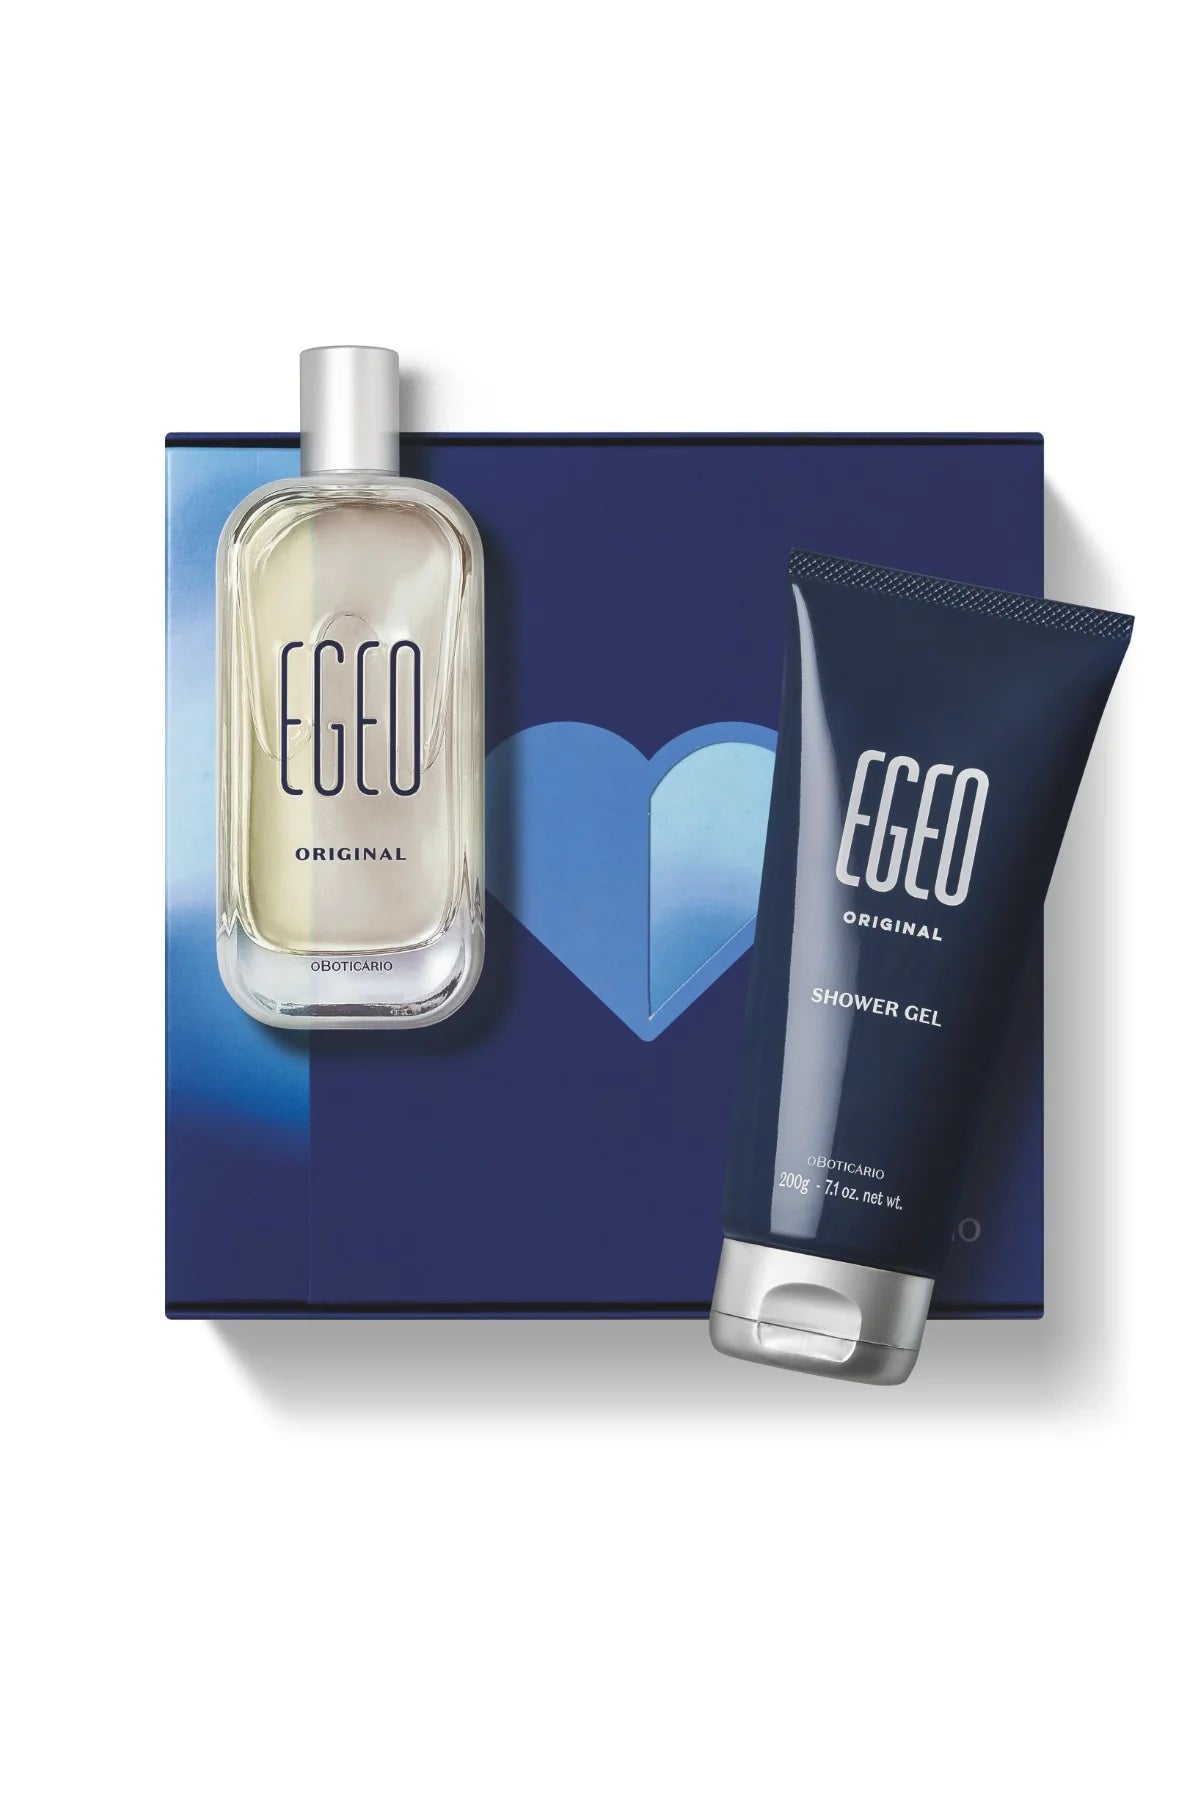 Egeo Original 90ml and Shower Gel 200g